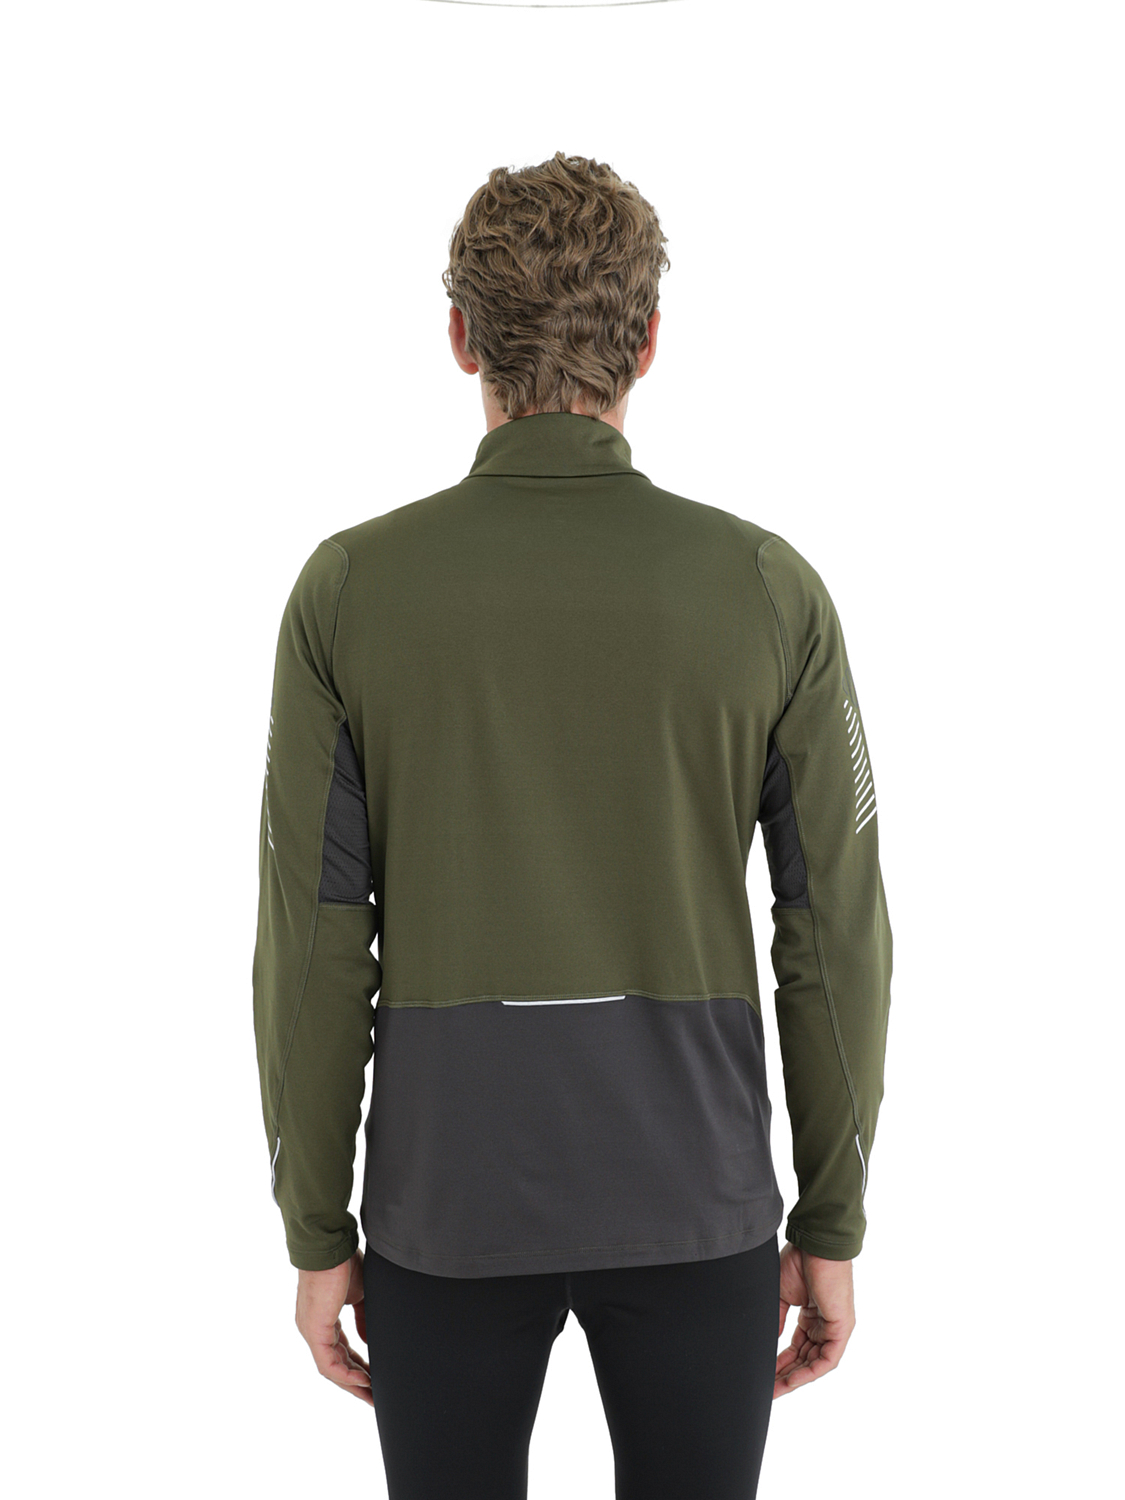 Куртка беговая Asics 2020-21 Lite-Show Winter 1/2 Zip Top Smog Green/Graphite Grey